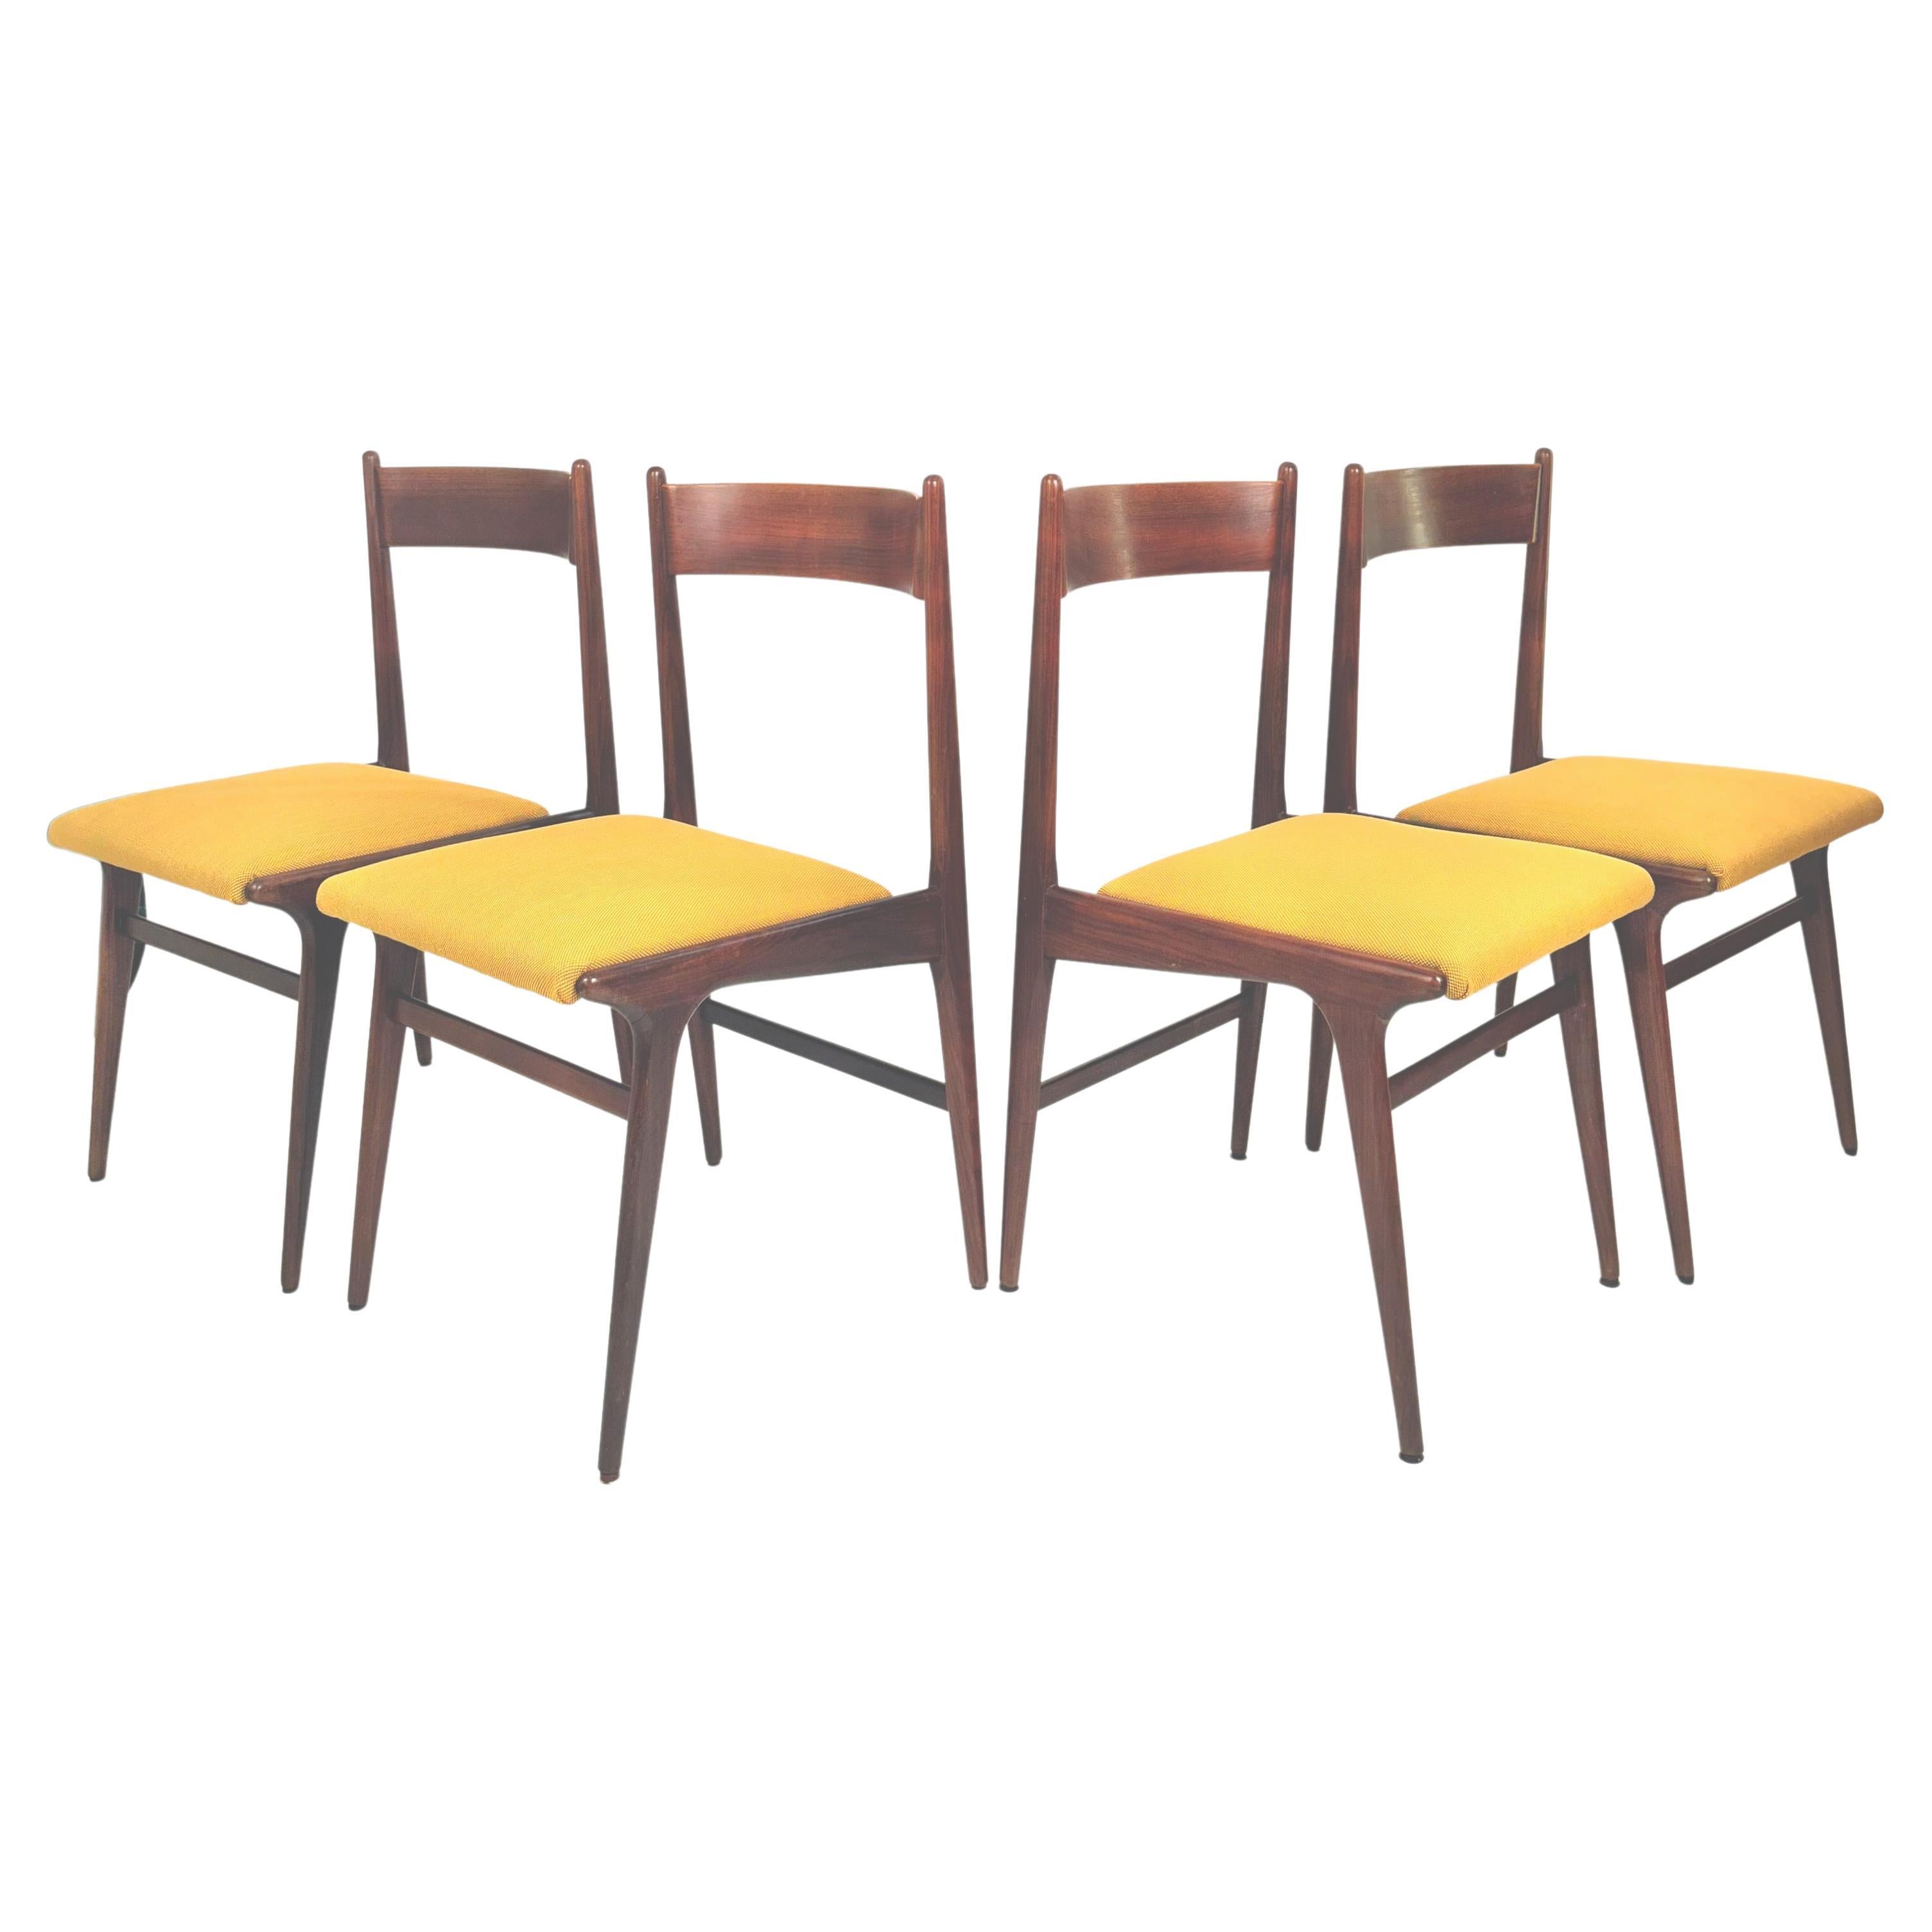 Carlo de Carli MidSet of Four Teak Dining Chairs in Kvadrat Yello Fabric, 1960s For Sale